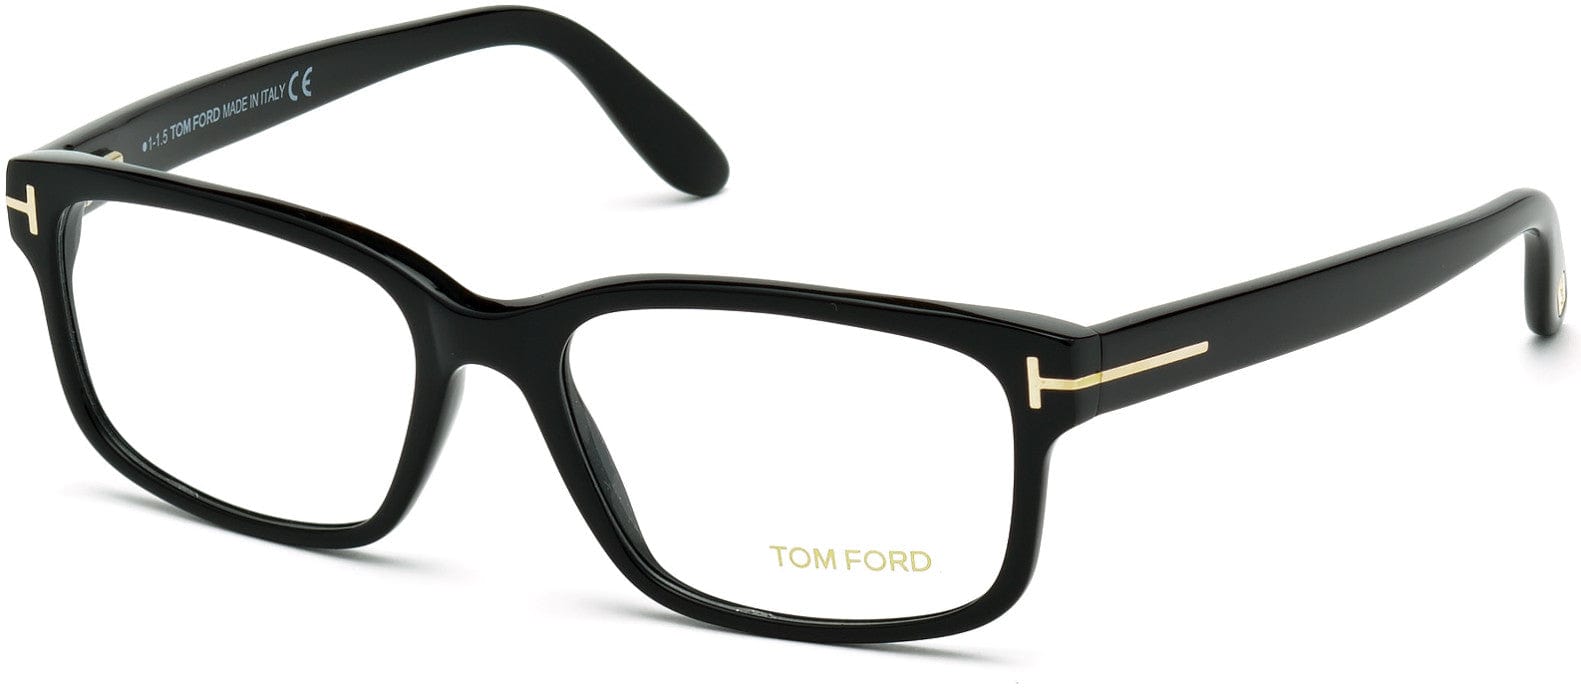 Tom Ford FT5313 Geometric Eyeglasses 001-001 - Shiny Black